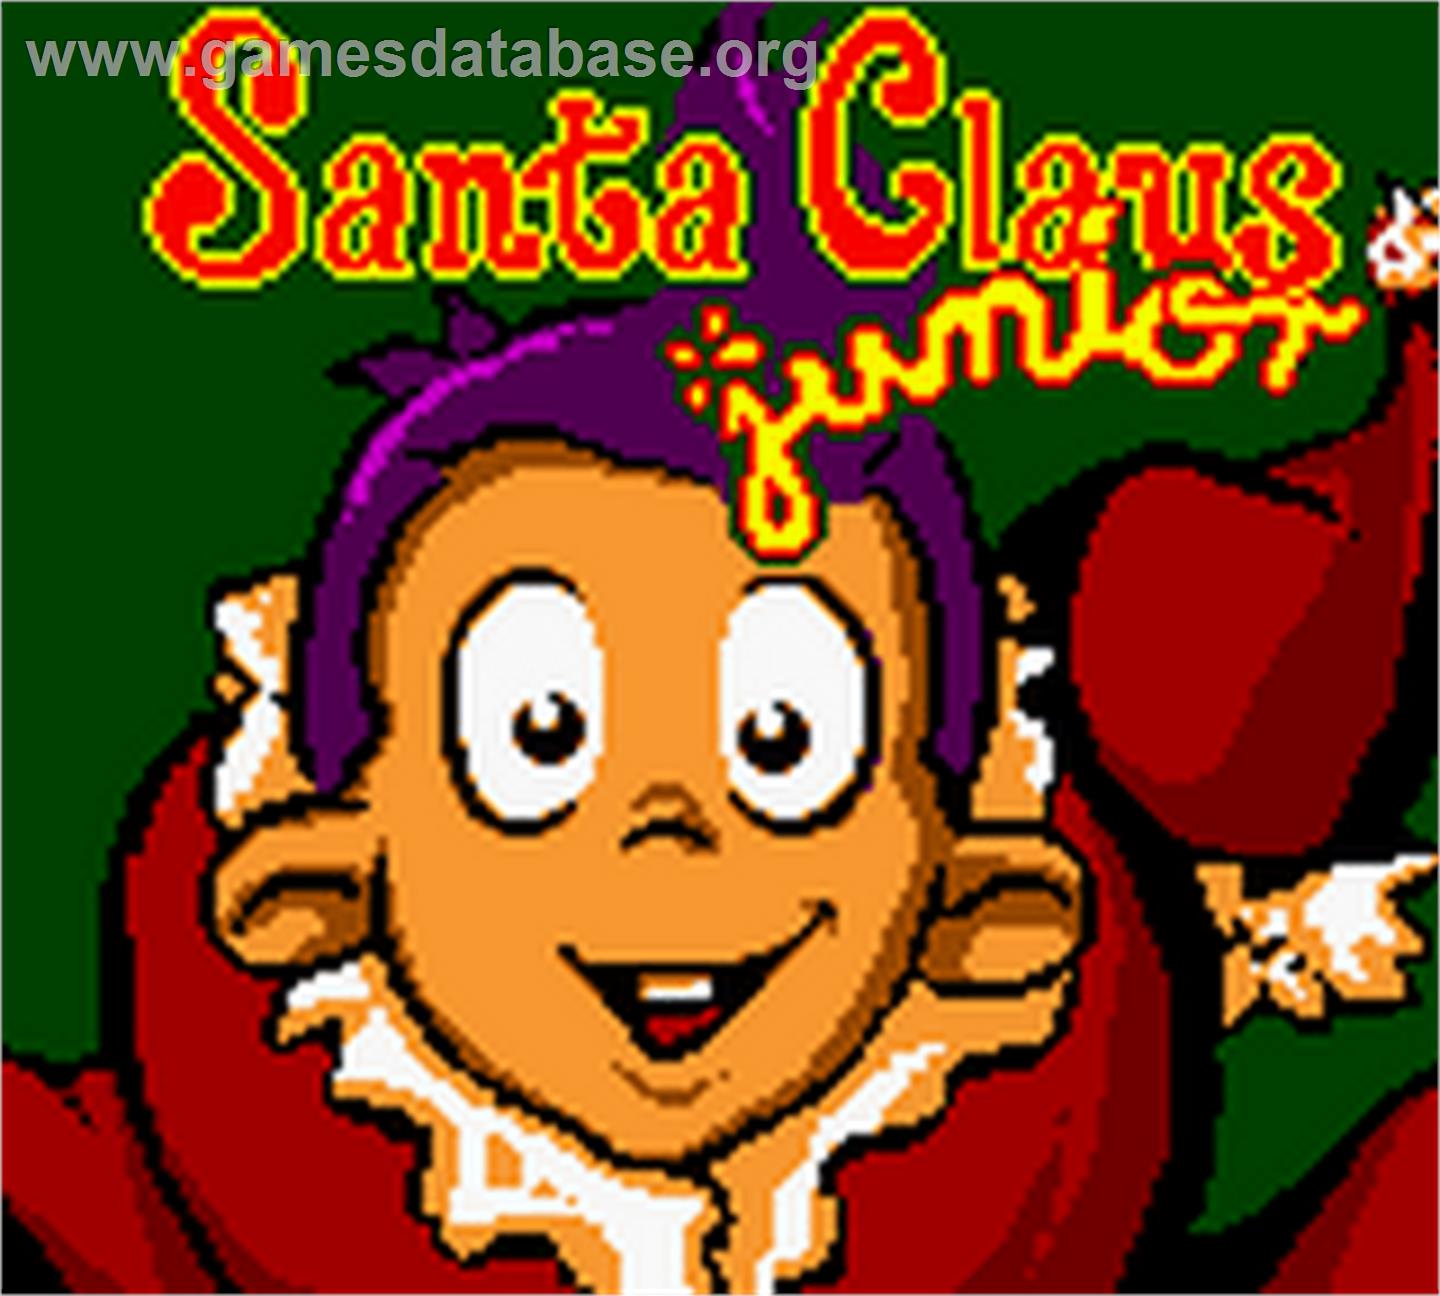 Santa Claus Junior - Nintendo Game Boy Color - Artwork - Title Screen